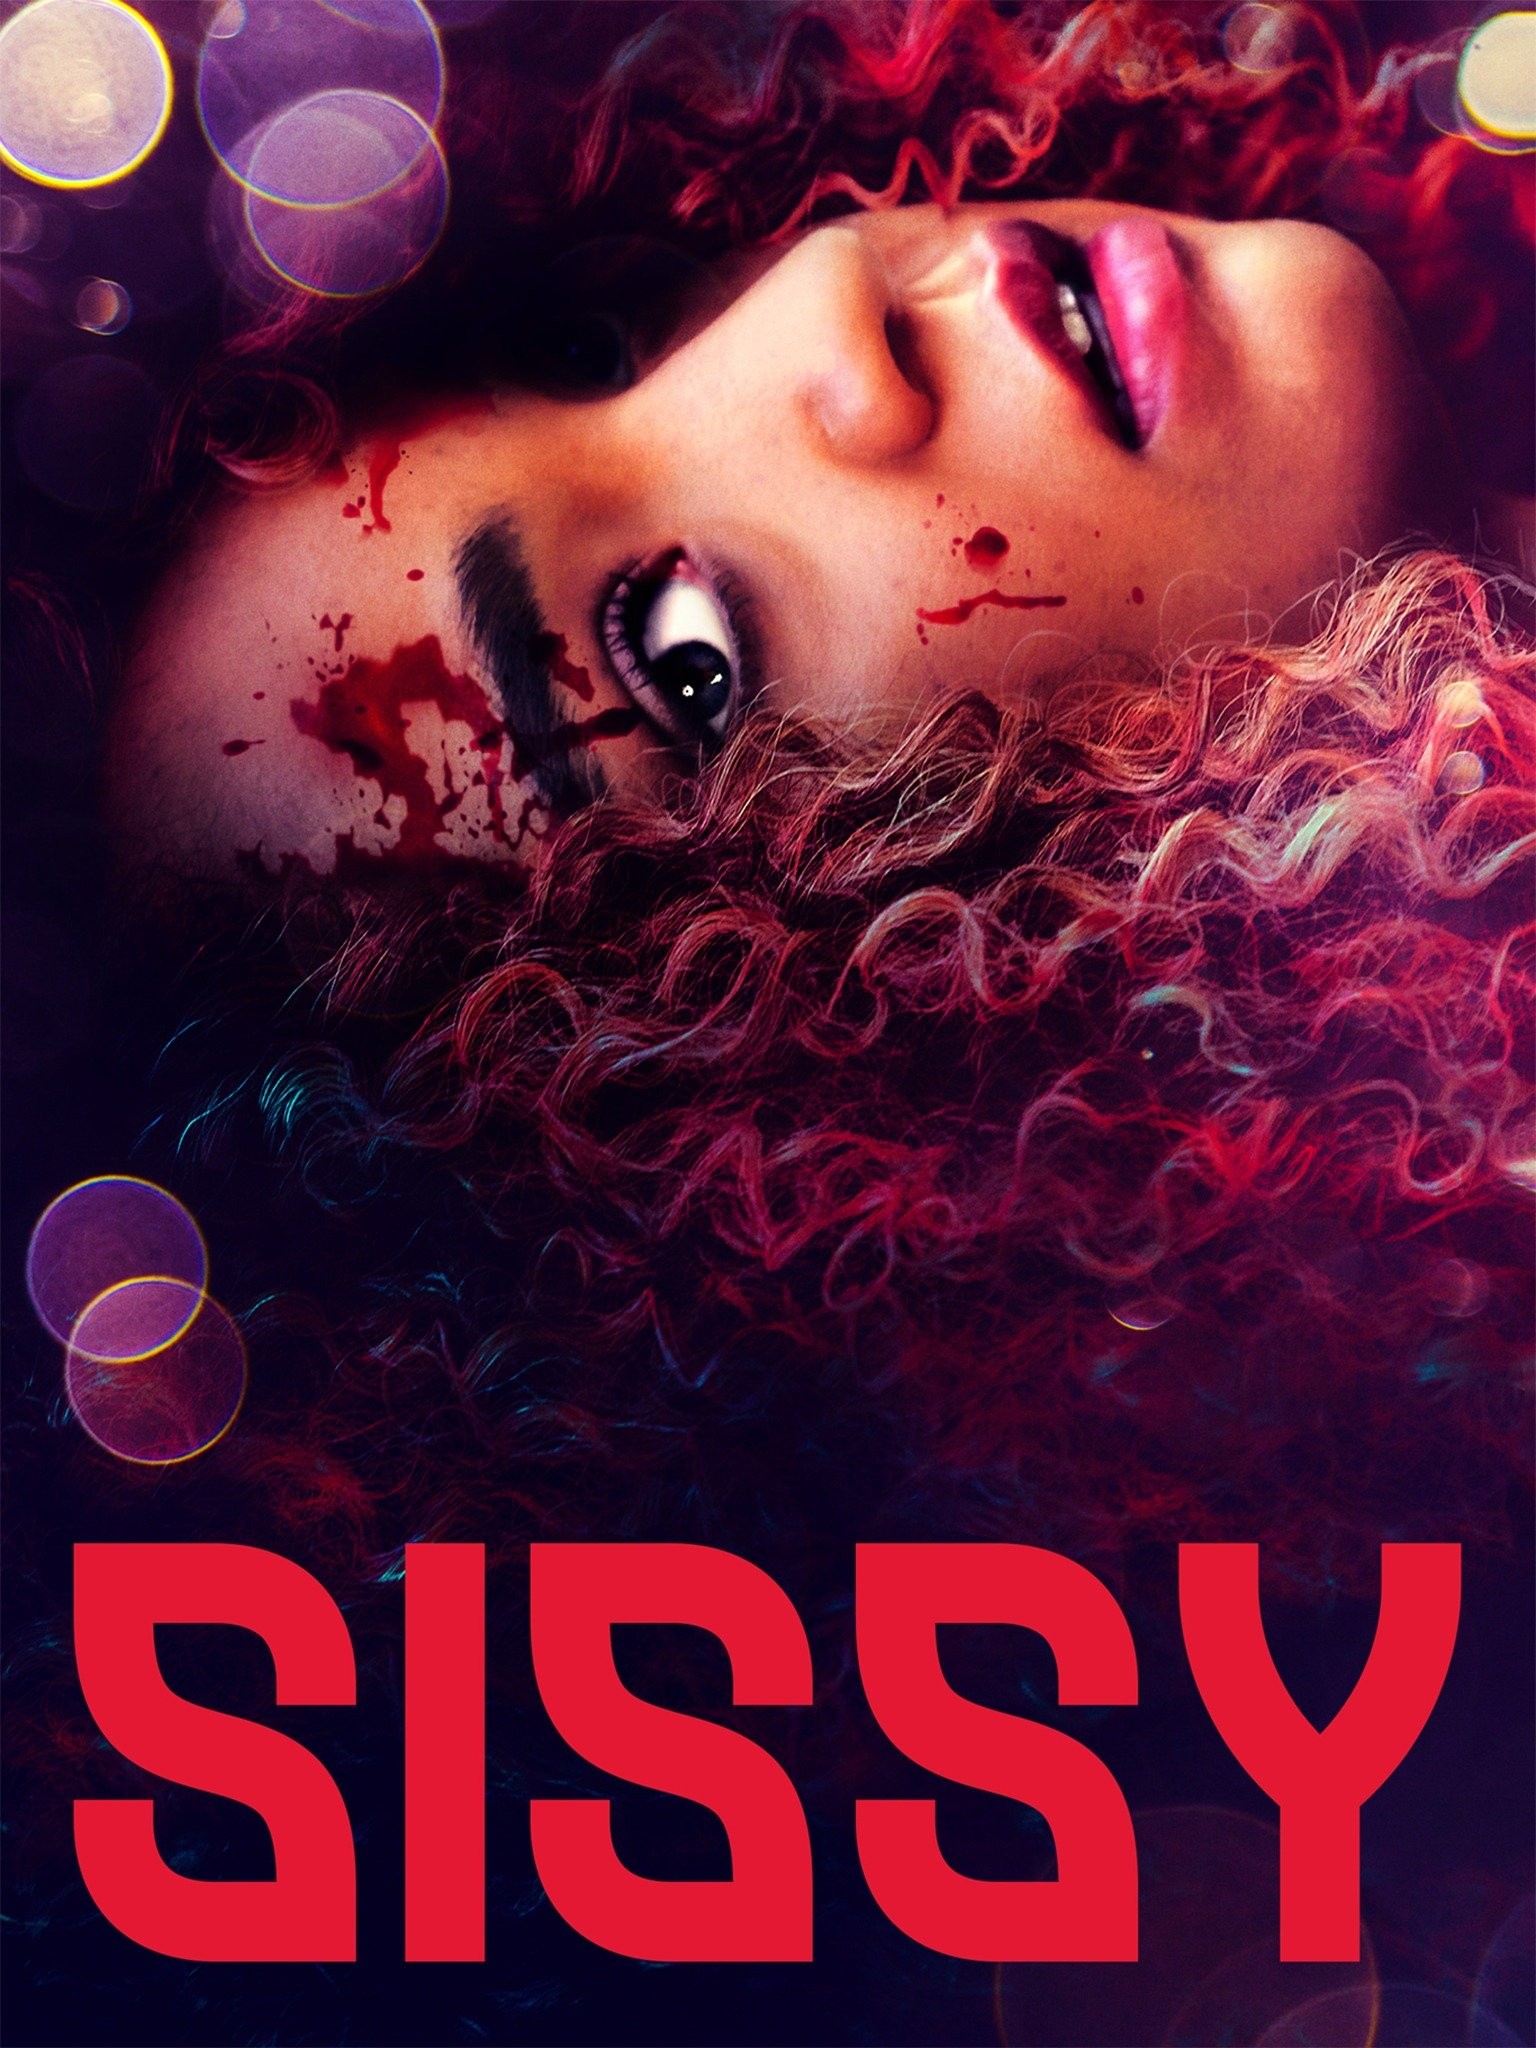 Sissy - Official Trailer 